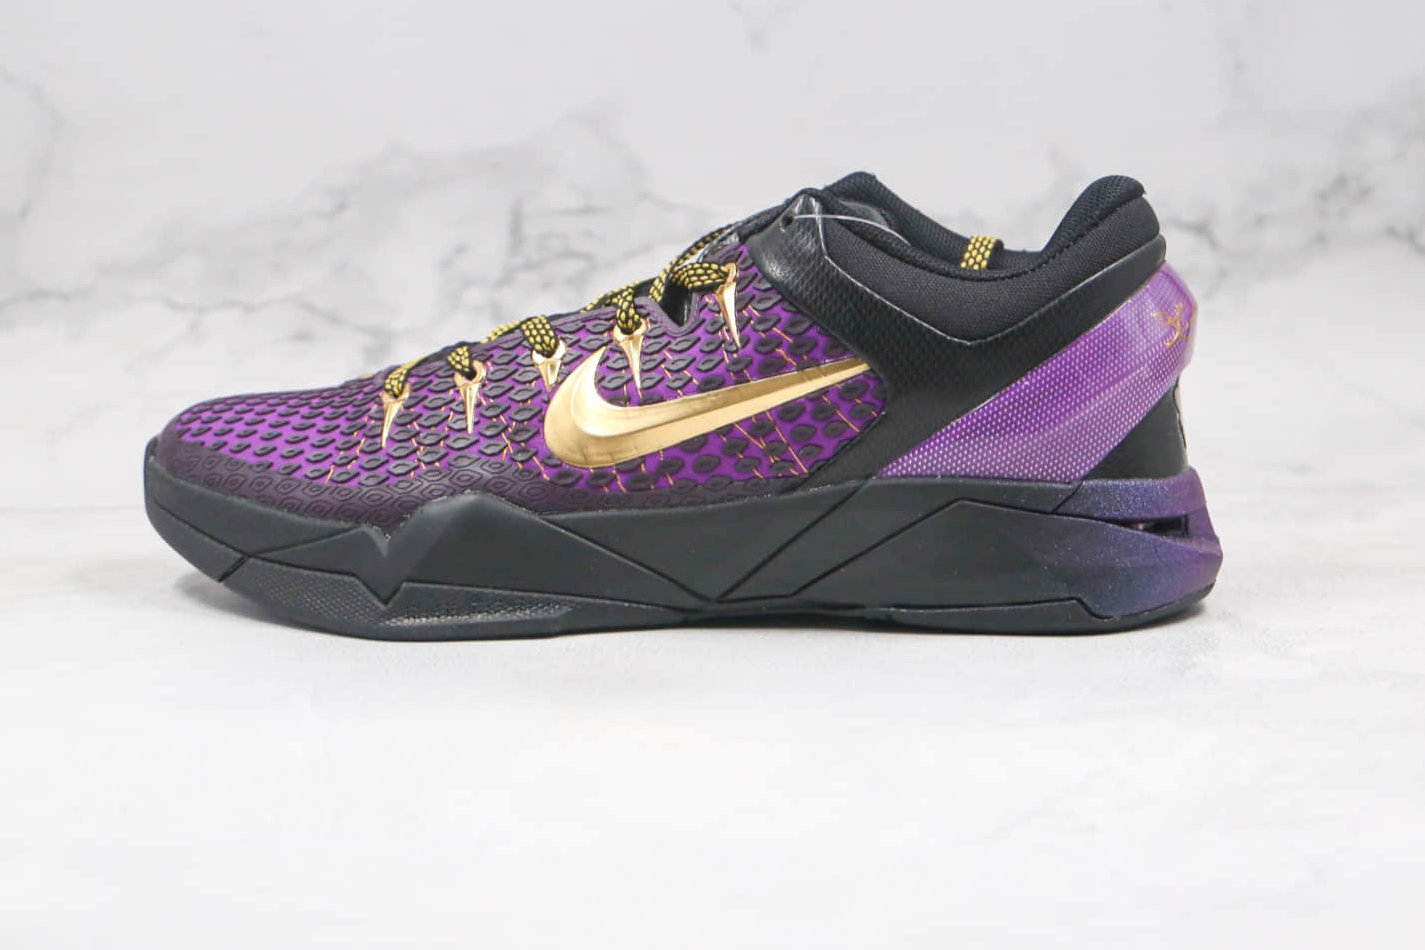 Nike Zoom Kobe 7 VII Black Purple Gold Basketball Shoes 511371-005: Superior Style and Performance